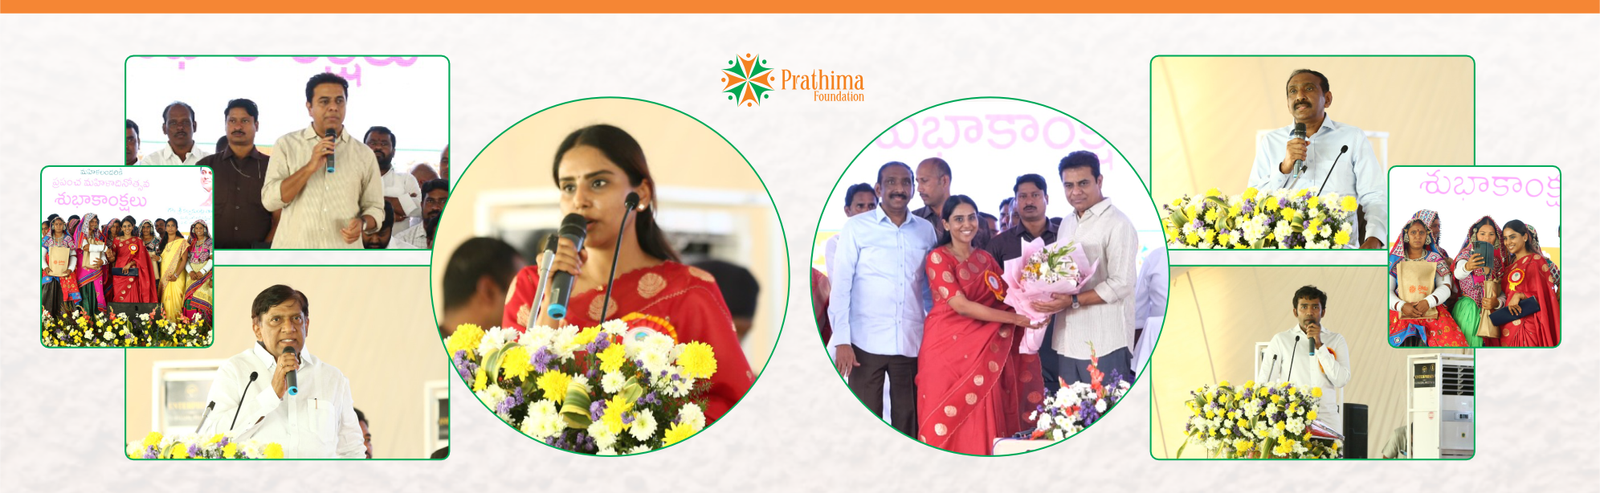 womens day by prathima foundation